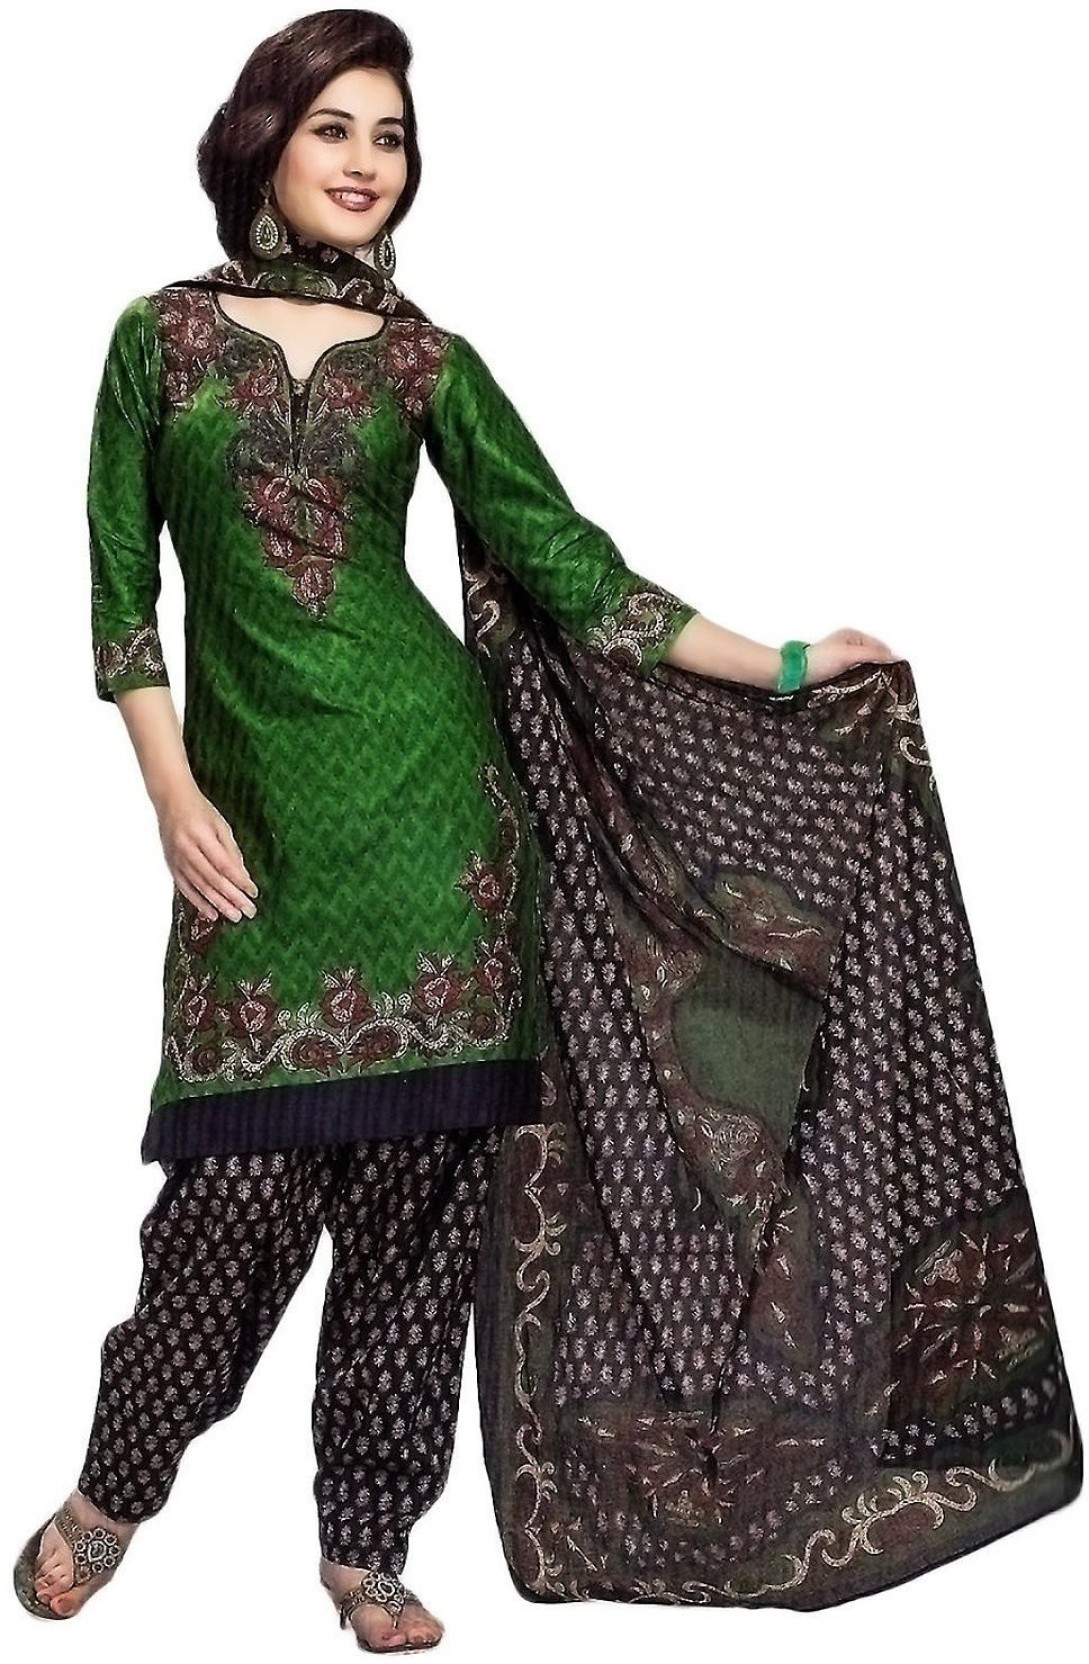 Miraan Cotton Printed Salwar Suit Dupatta Material Price in India - Buy ...